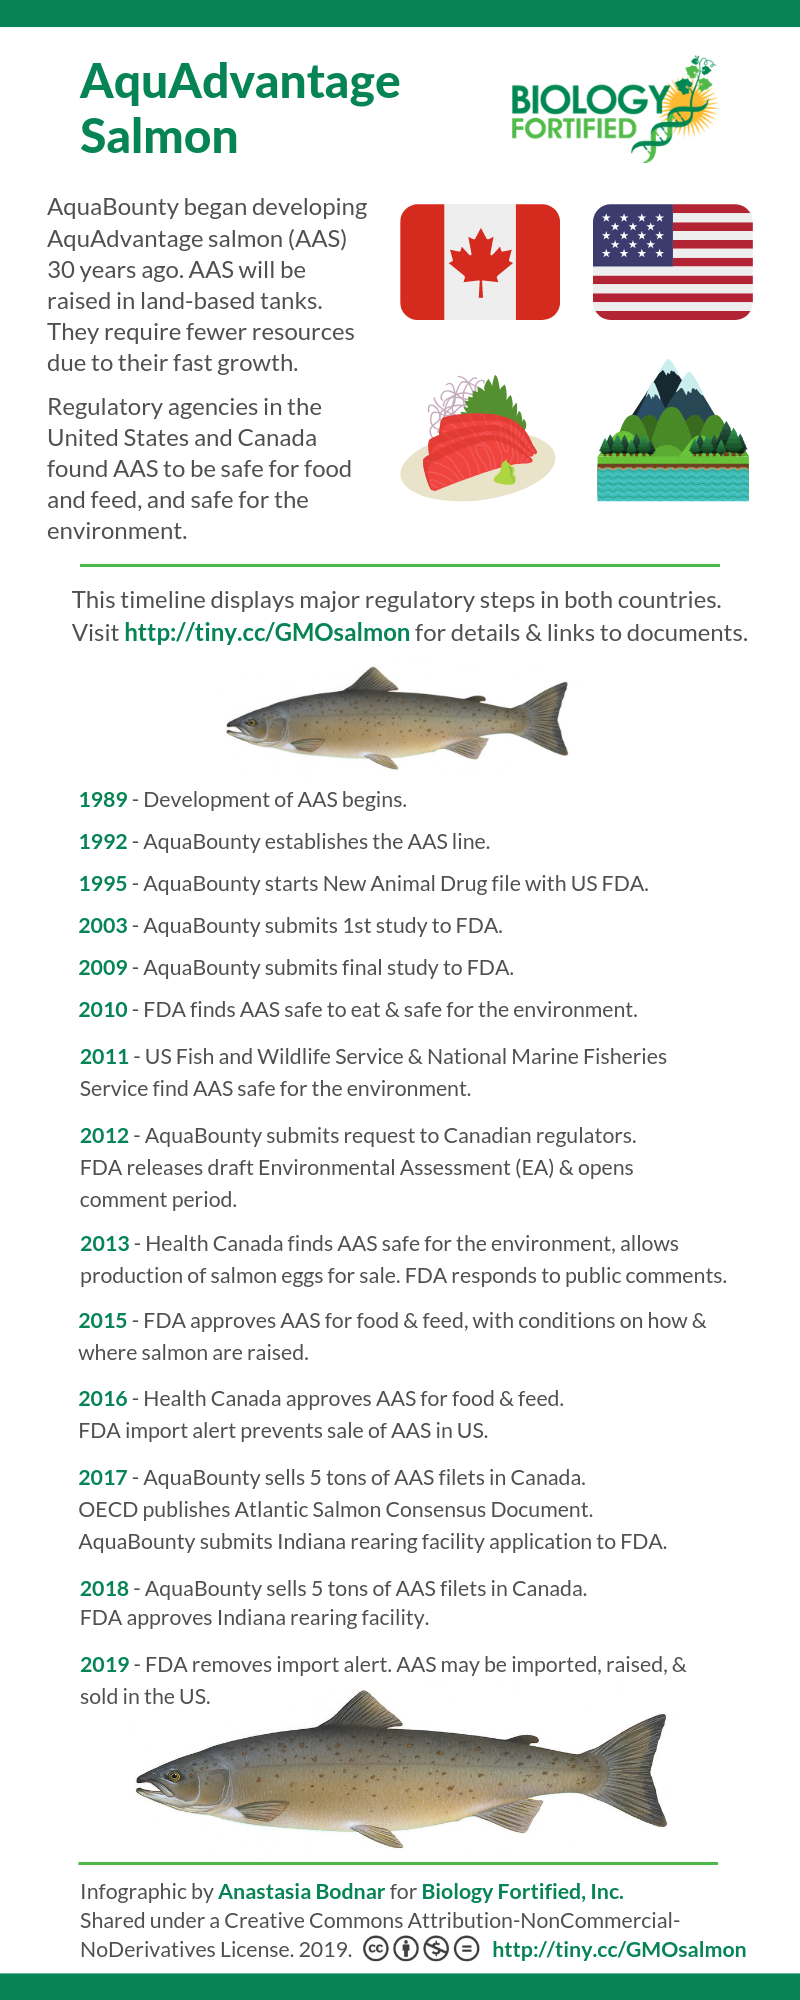 AquAdvantage salmon regulation